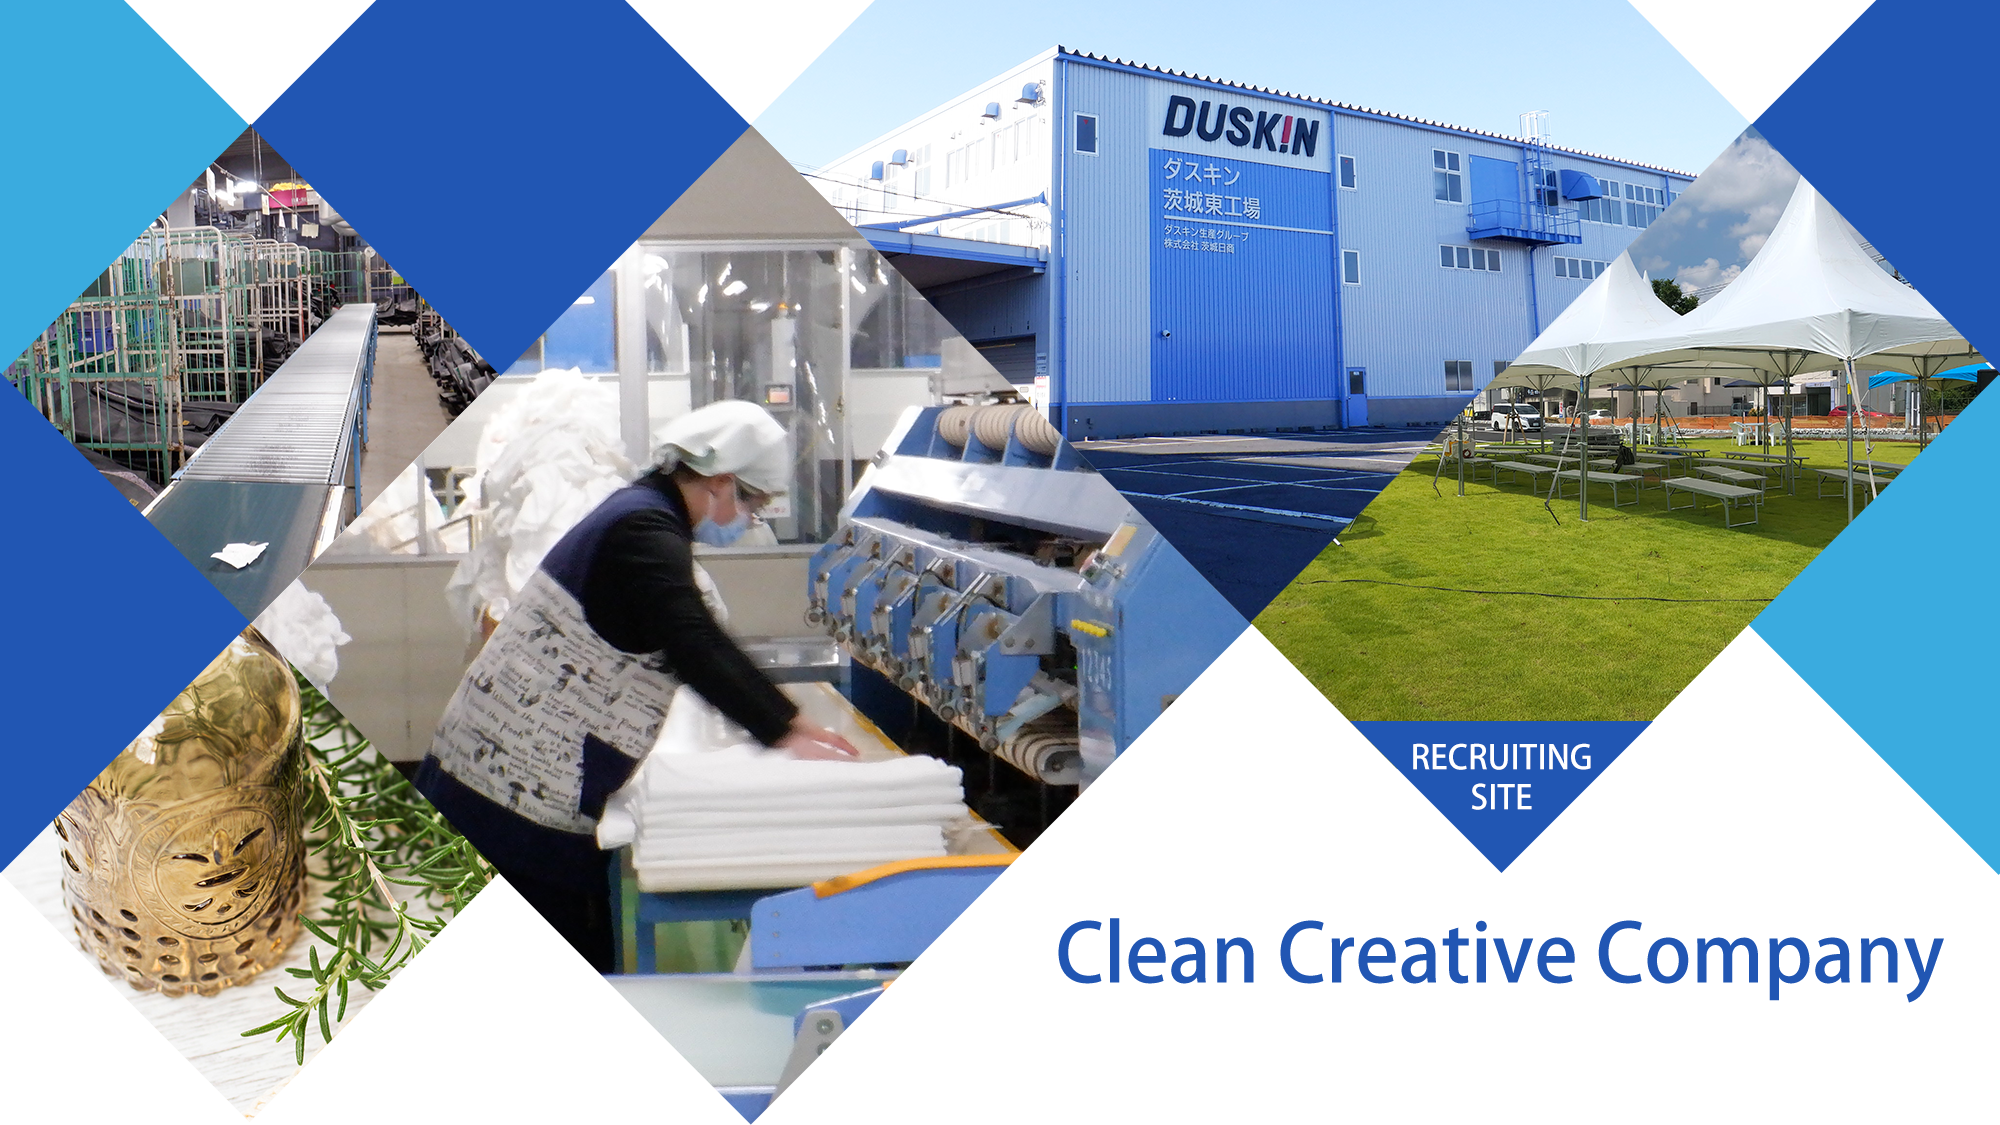 Clean Creative Company